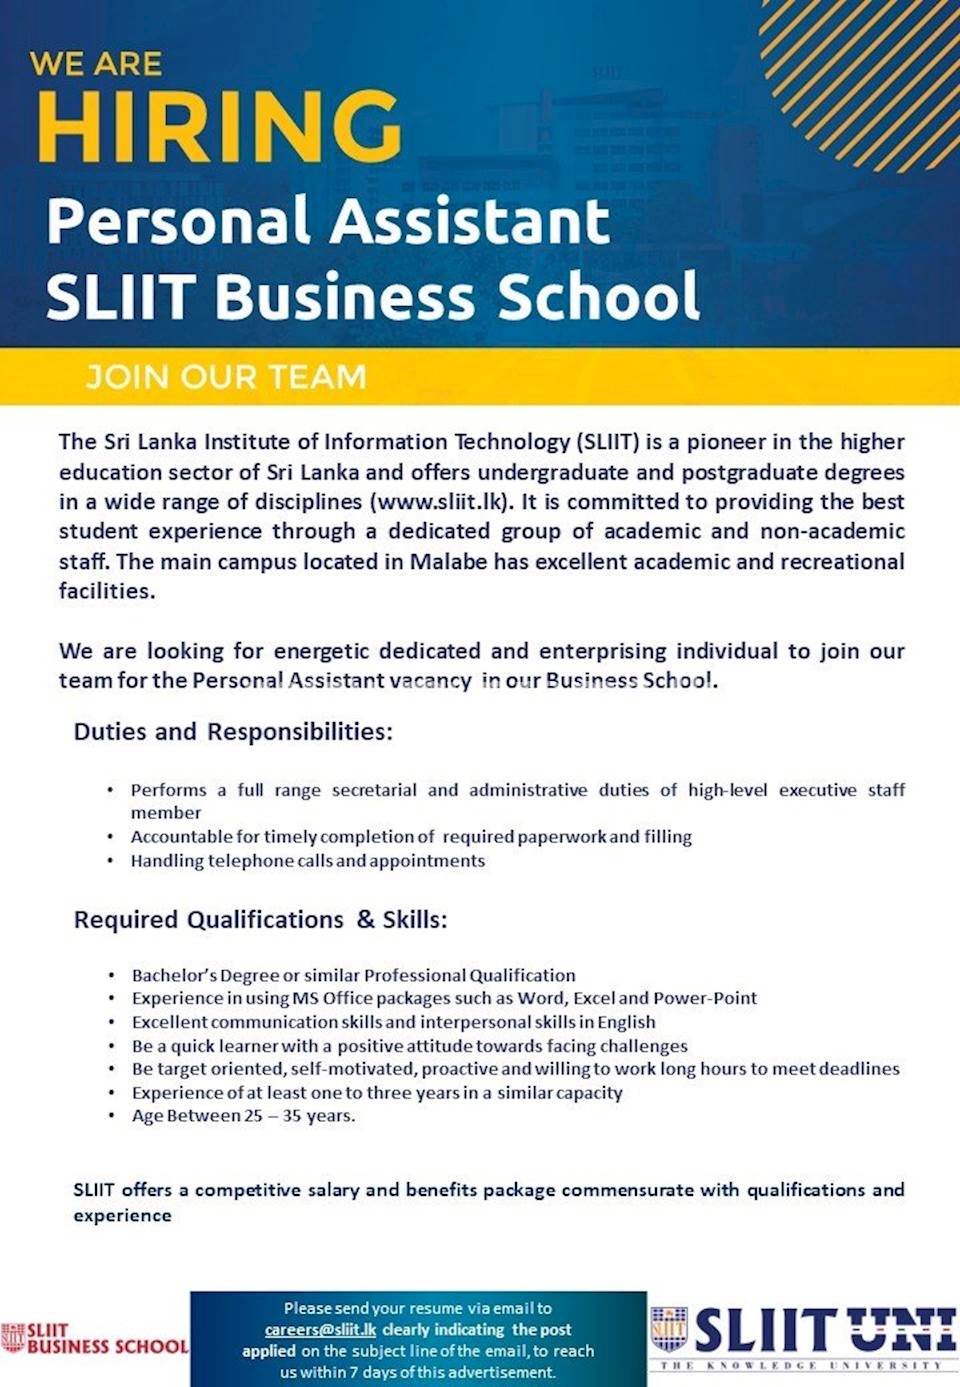 Personal Assistant - SLIIT Business School